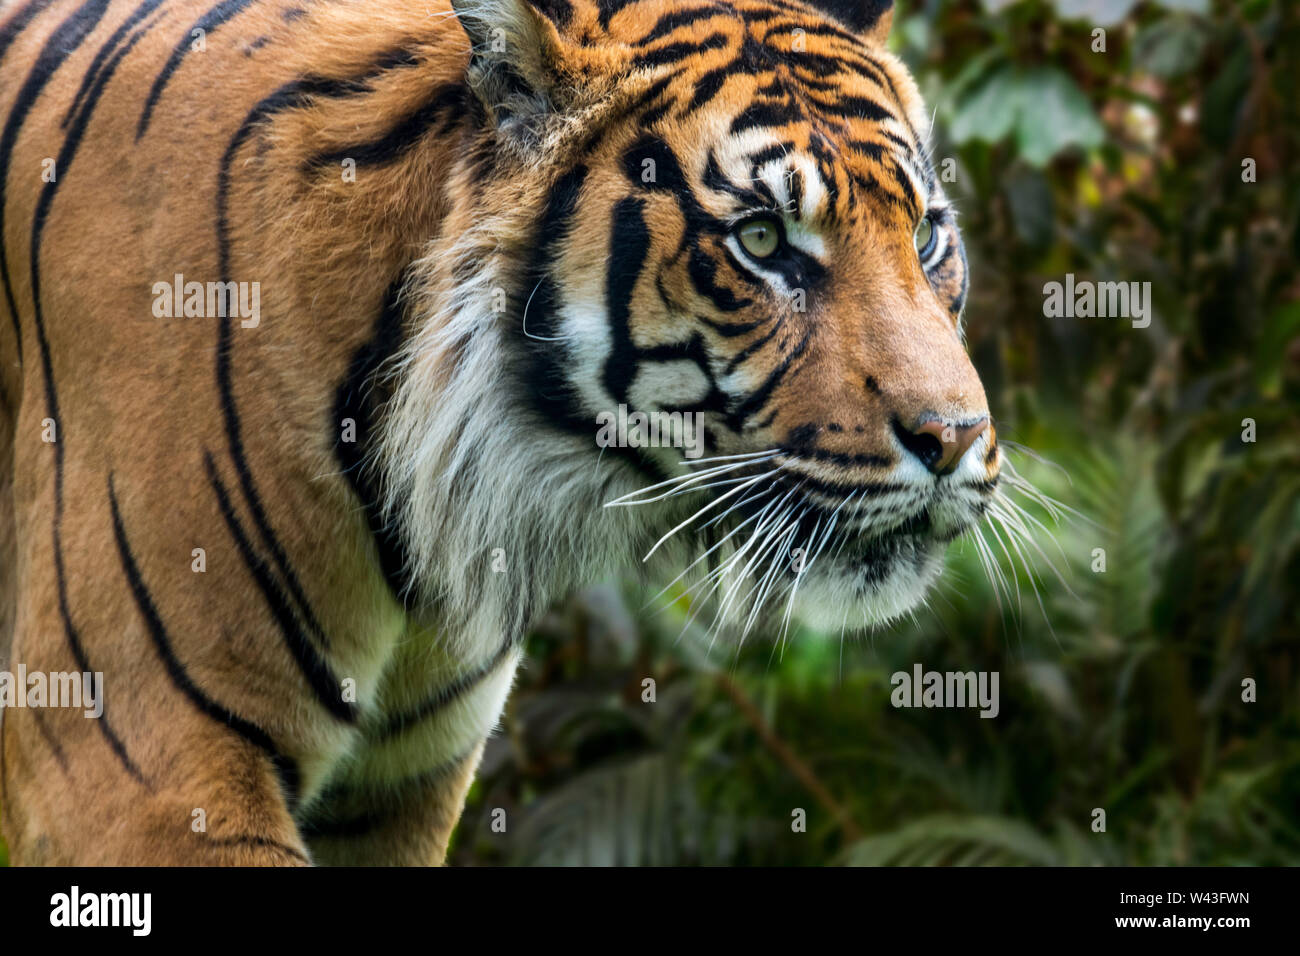 Sumatran tiger (Panthera tigris sondaica) in tropical forest, native to the Indonesian island of Sumatra, Indonesia Stock Photo